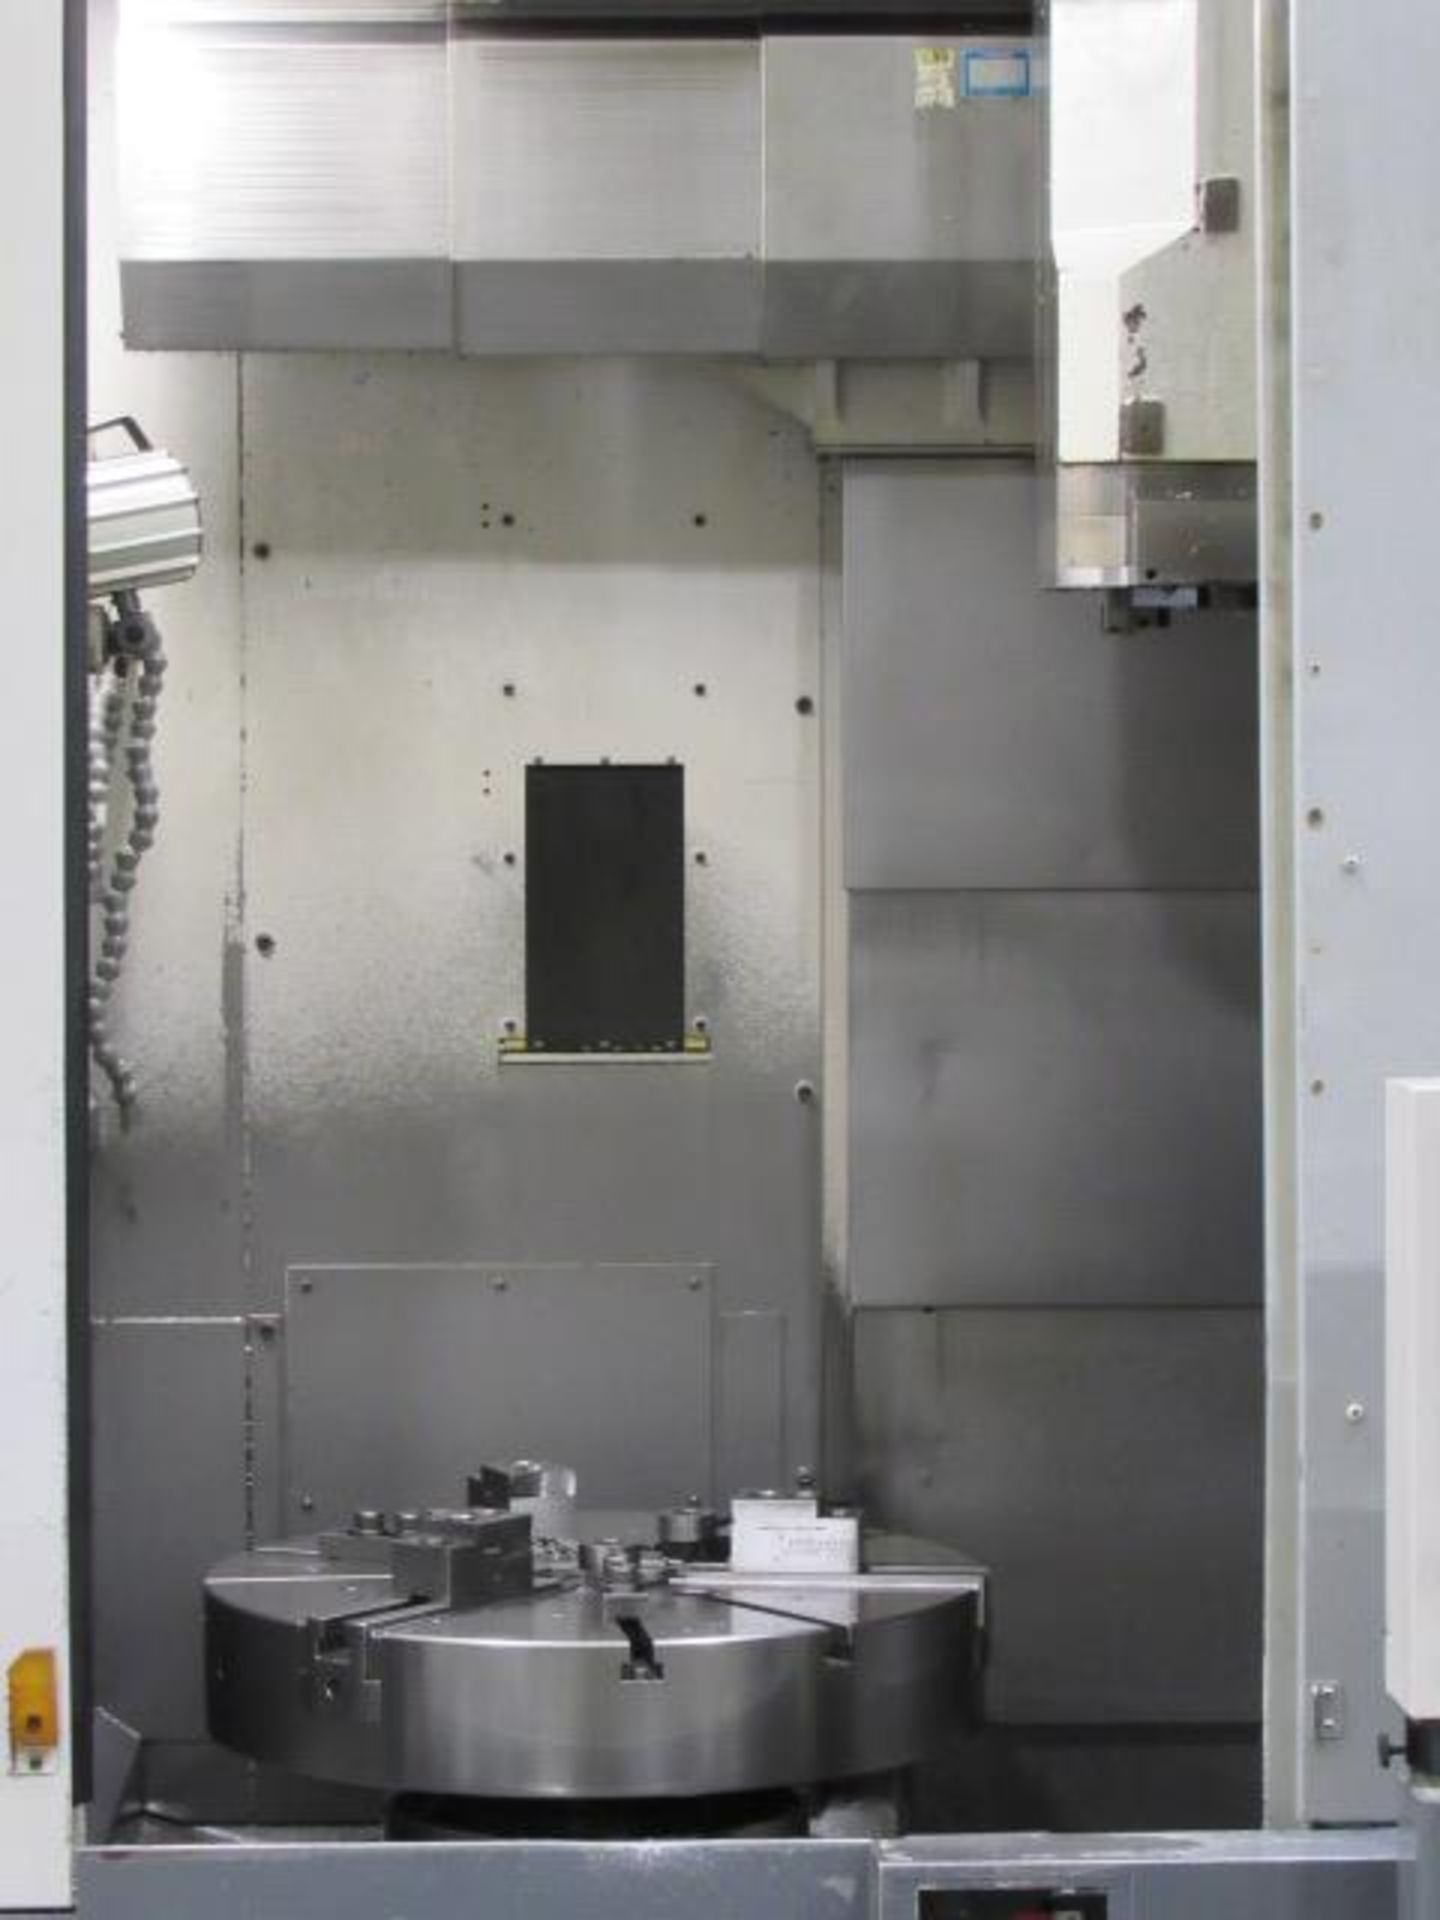 Okuma VTM-100 CNC Vertical Turning Center with Live Milling - Image 4 of 9